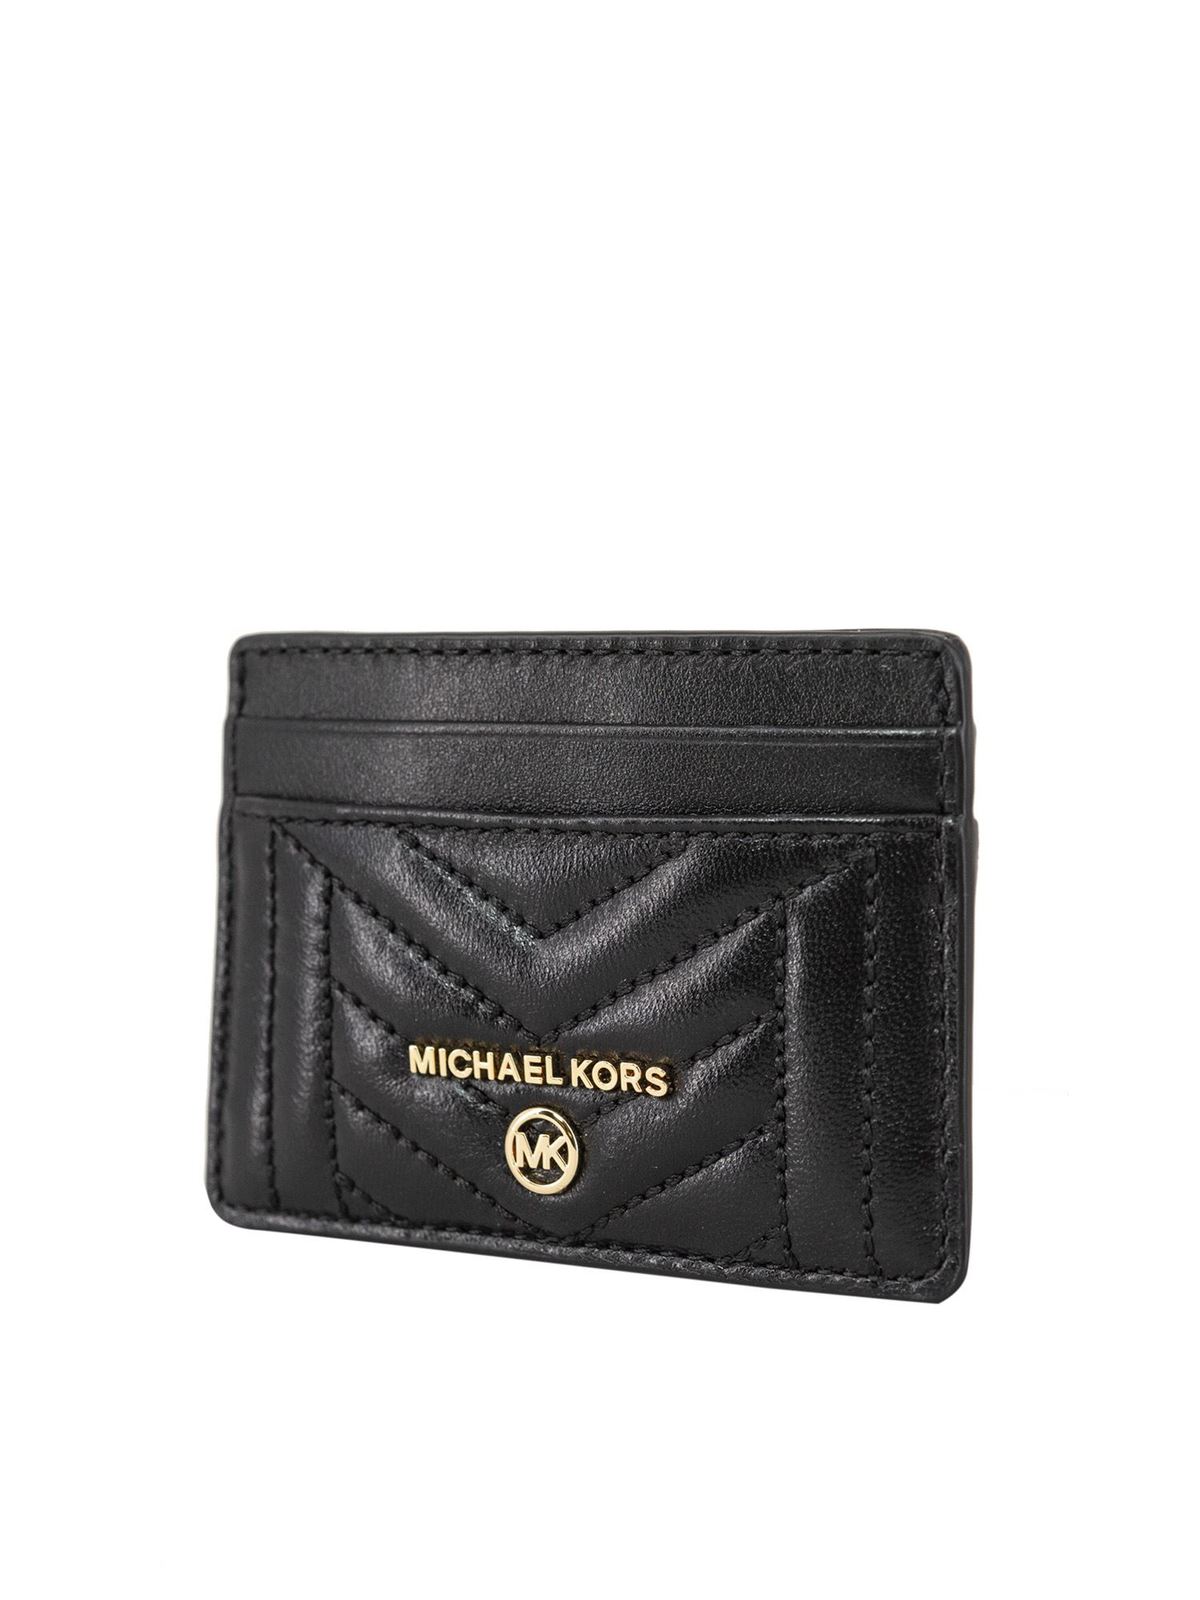 Michael Kors Women JET SET Monogram Medium Zip Around Card Case Holder Wallet MK  eBay